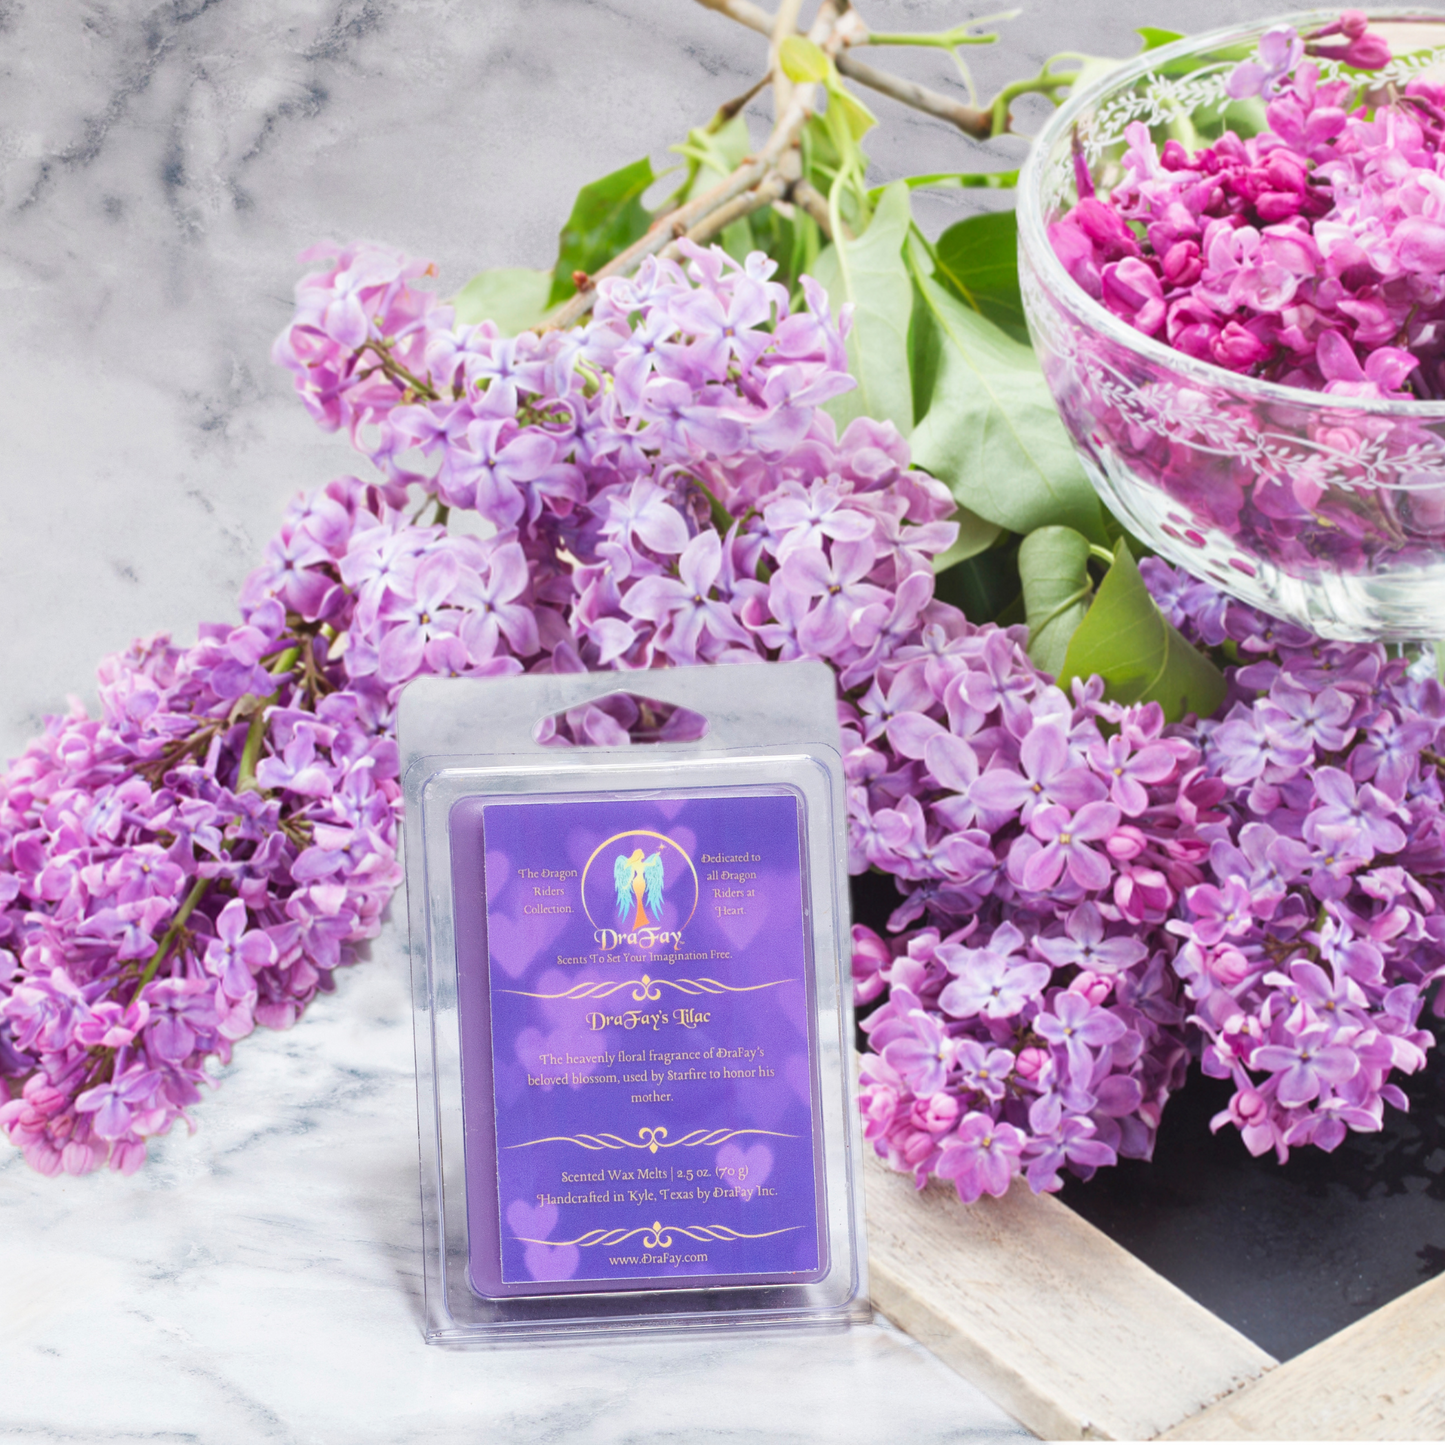 Lilac Perfume for peace, harmony, and Divine Feminine magic